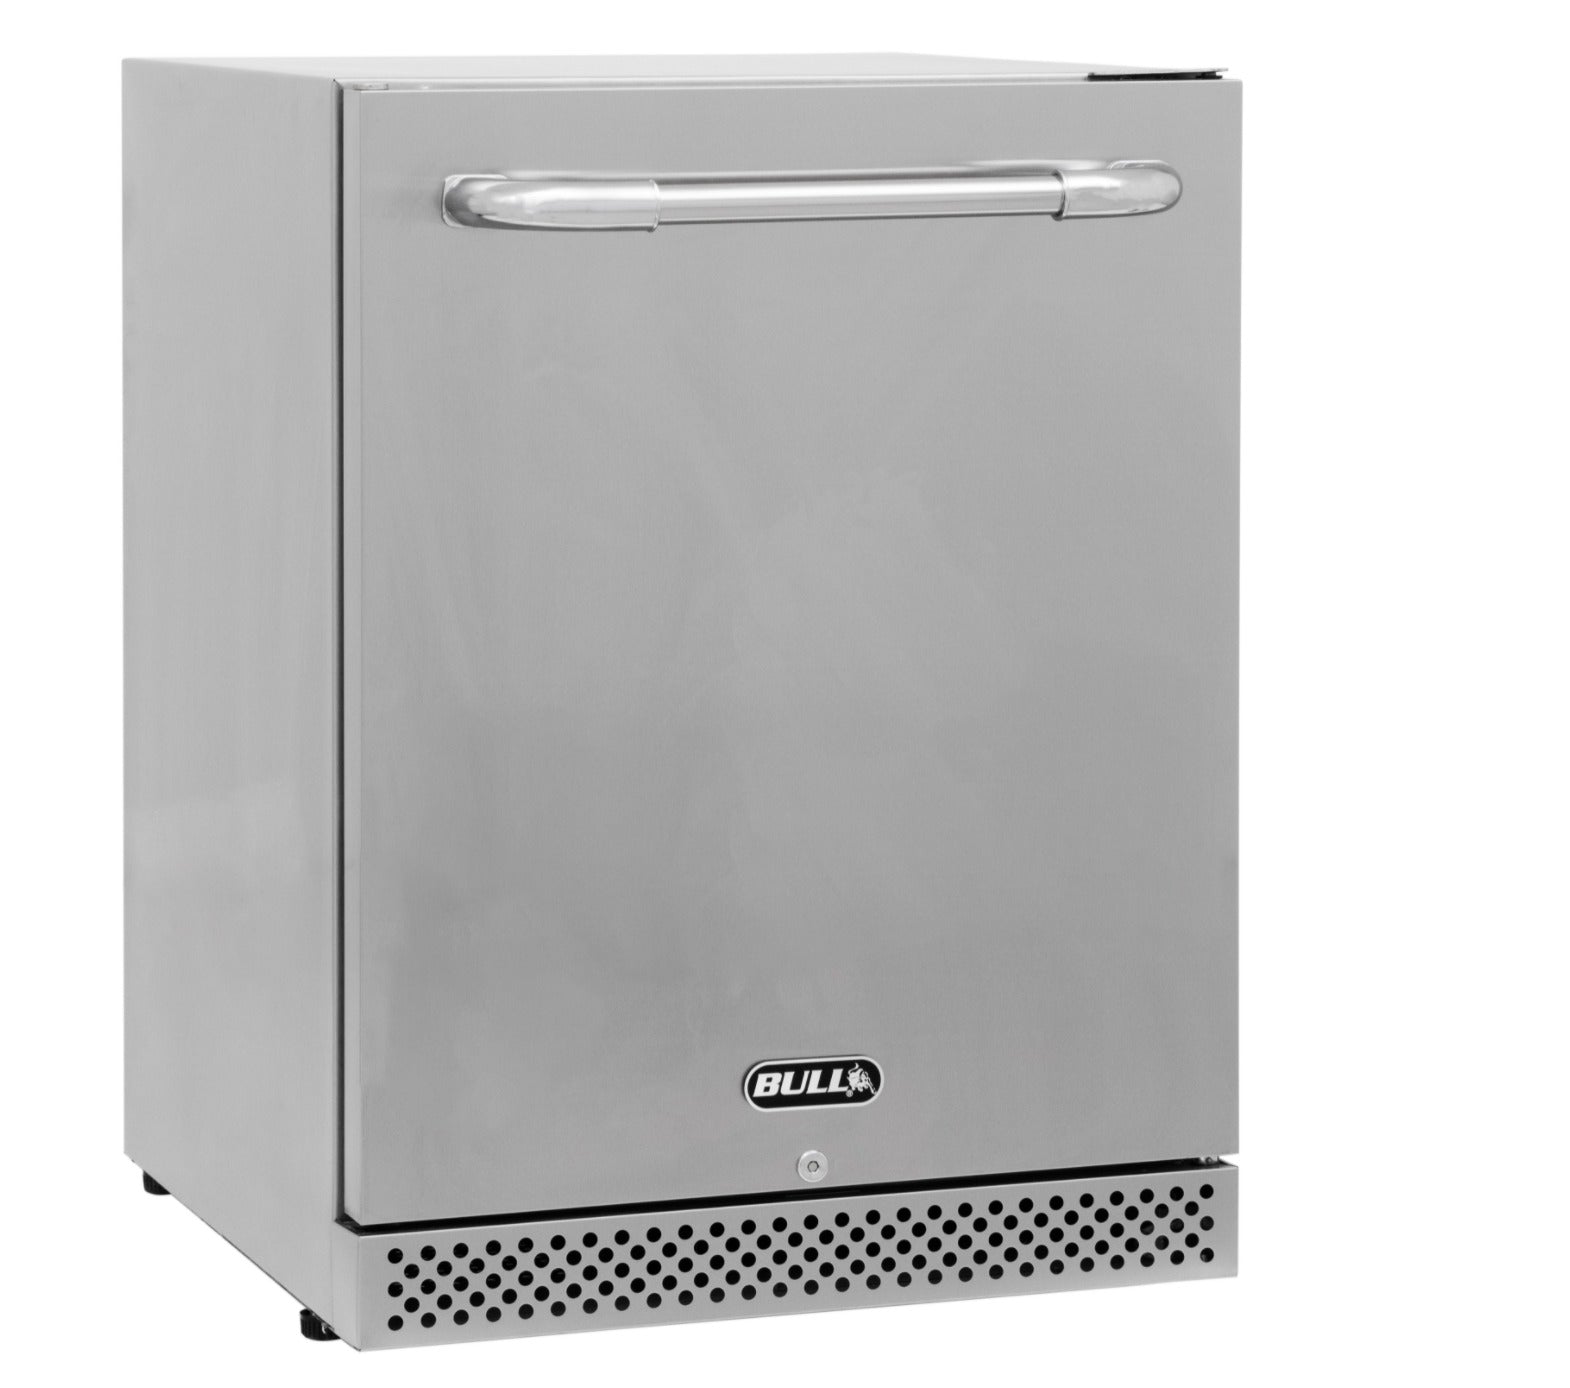 Bull Premium Commercial Outdoor Refrigerator Series ll 840H